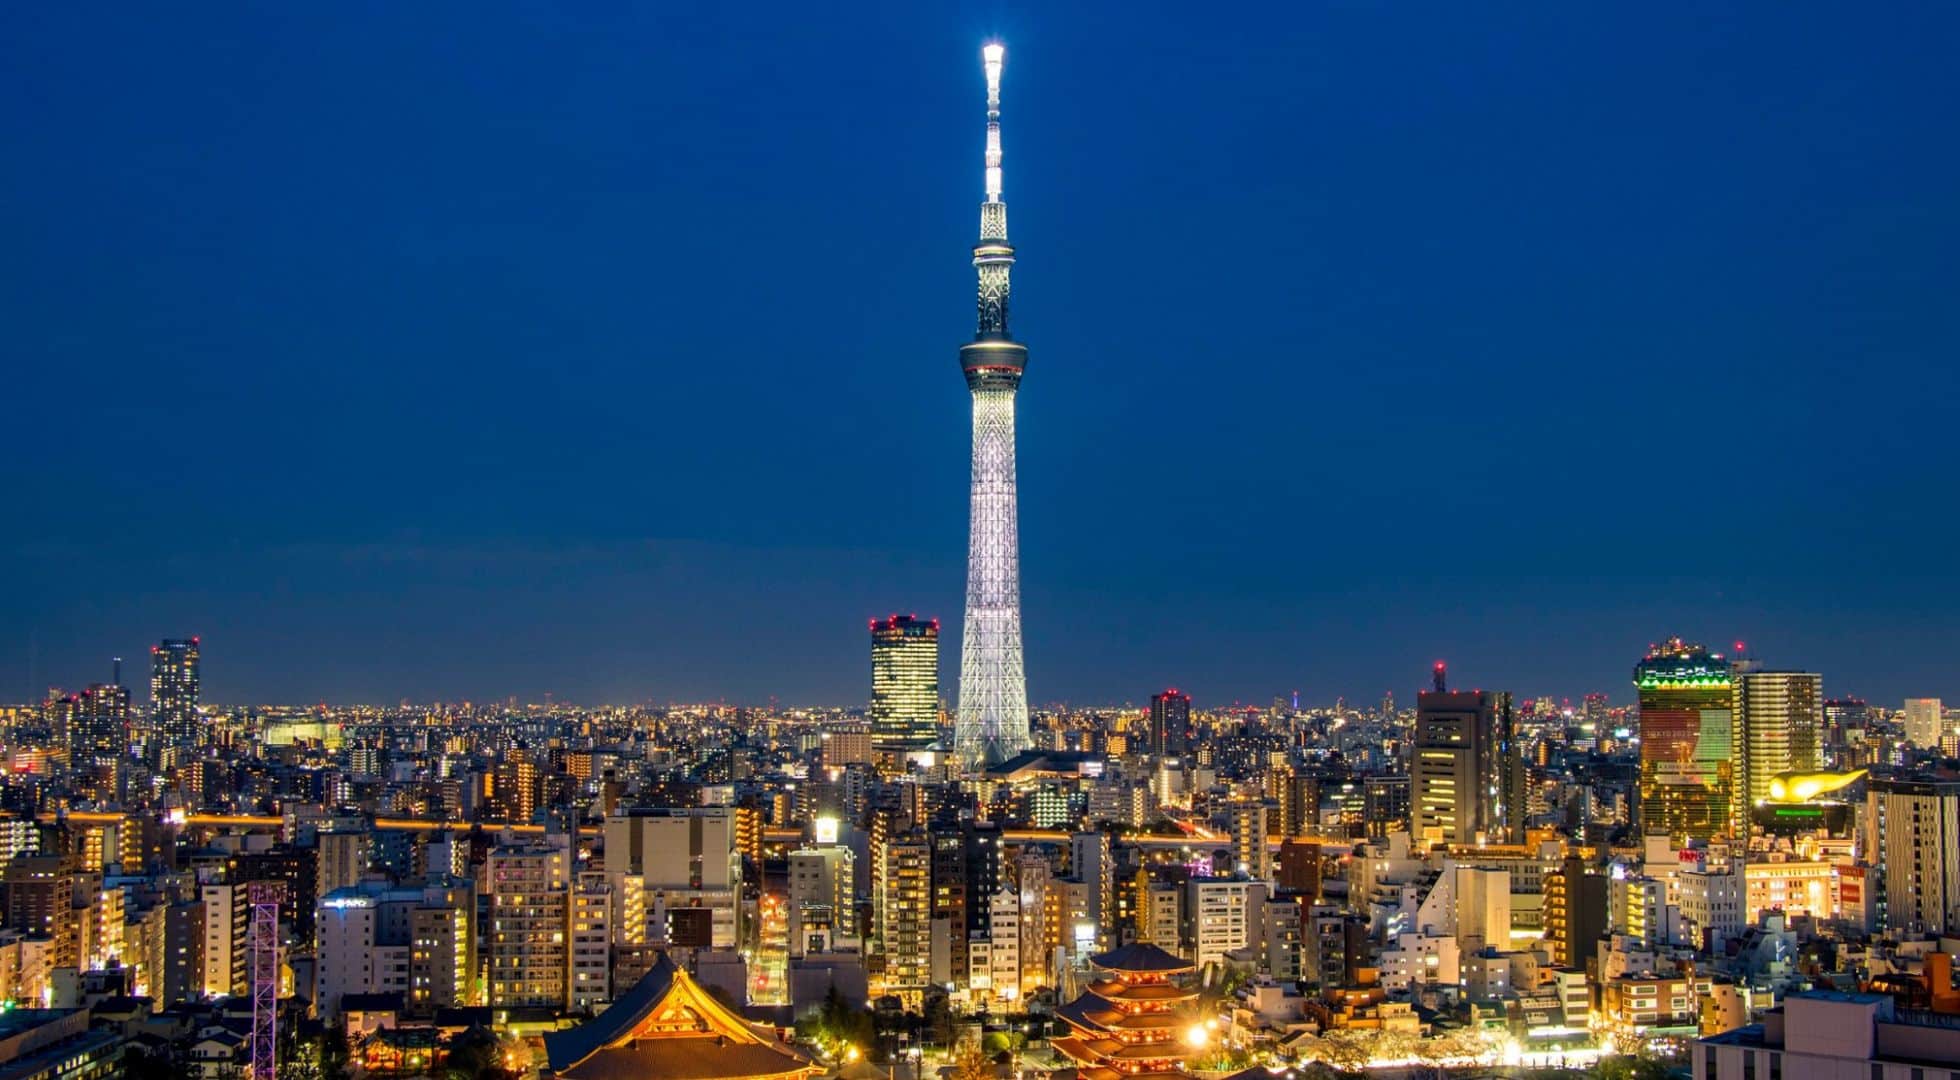 Tokyo At Night: Visit an Observation Deck